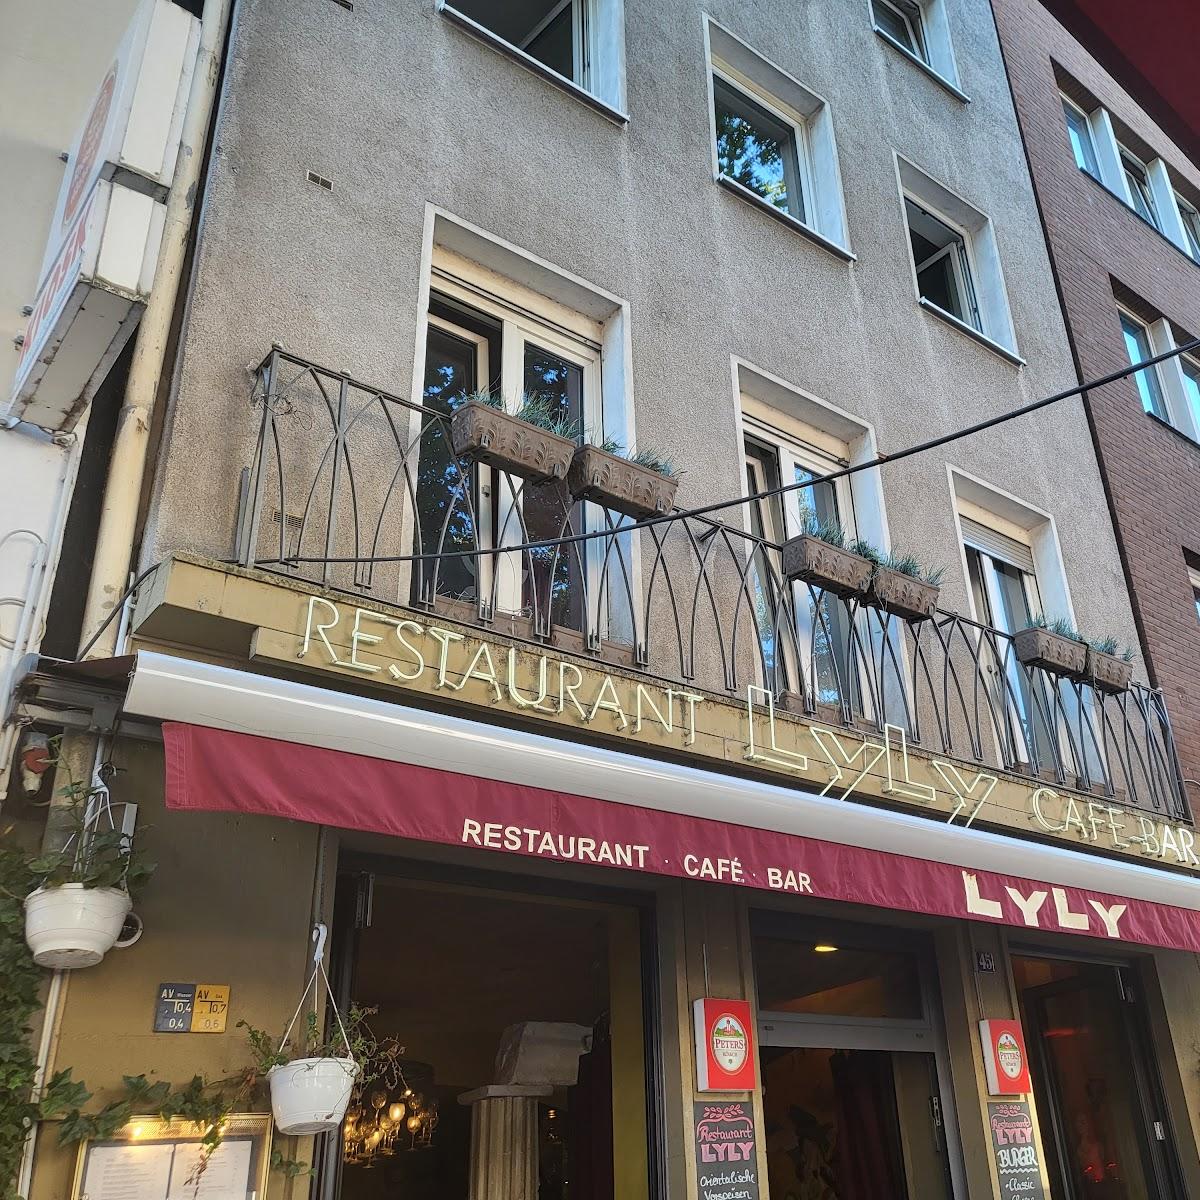 Restaurant "LyLy" in Köln